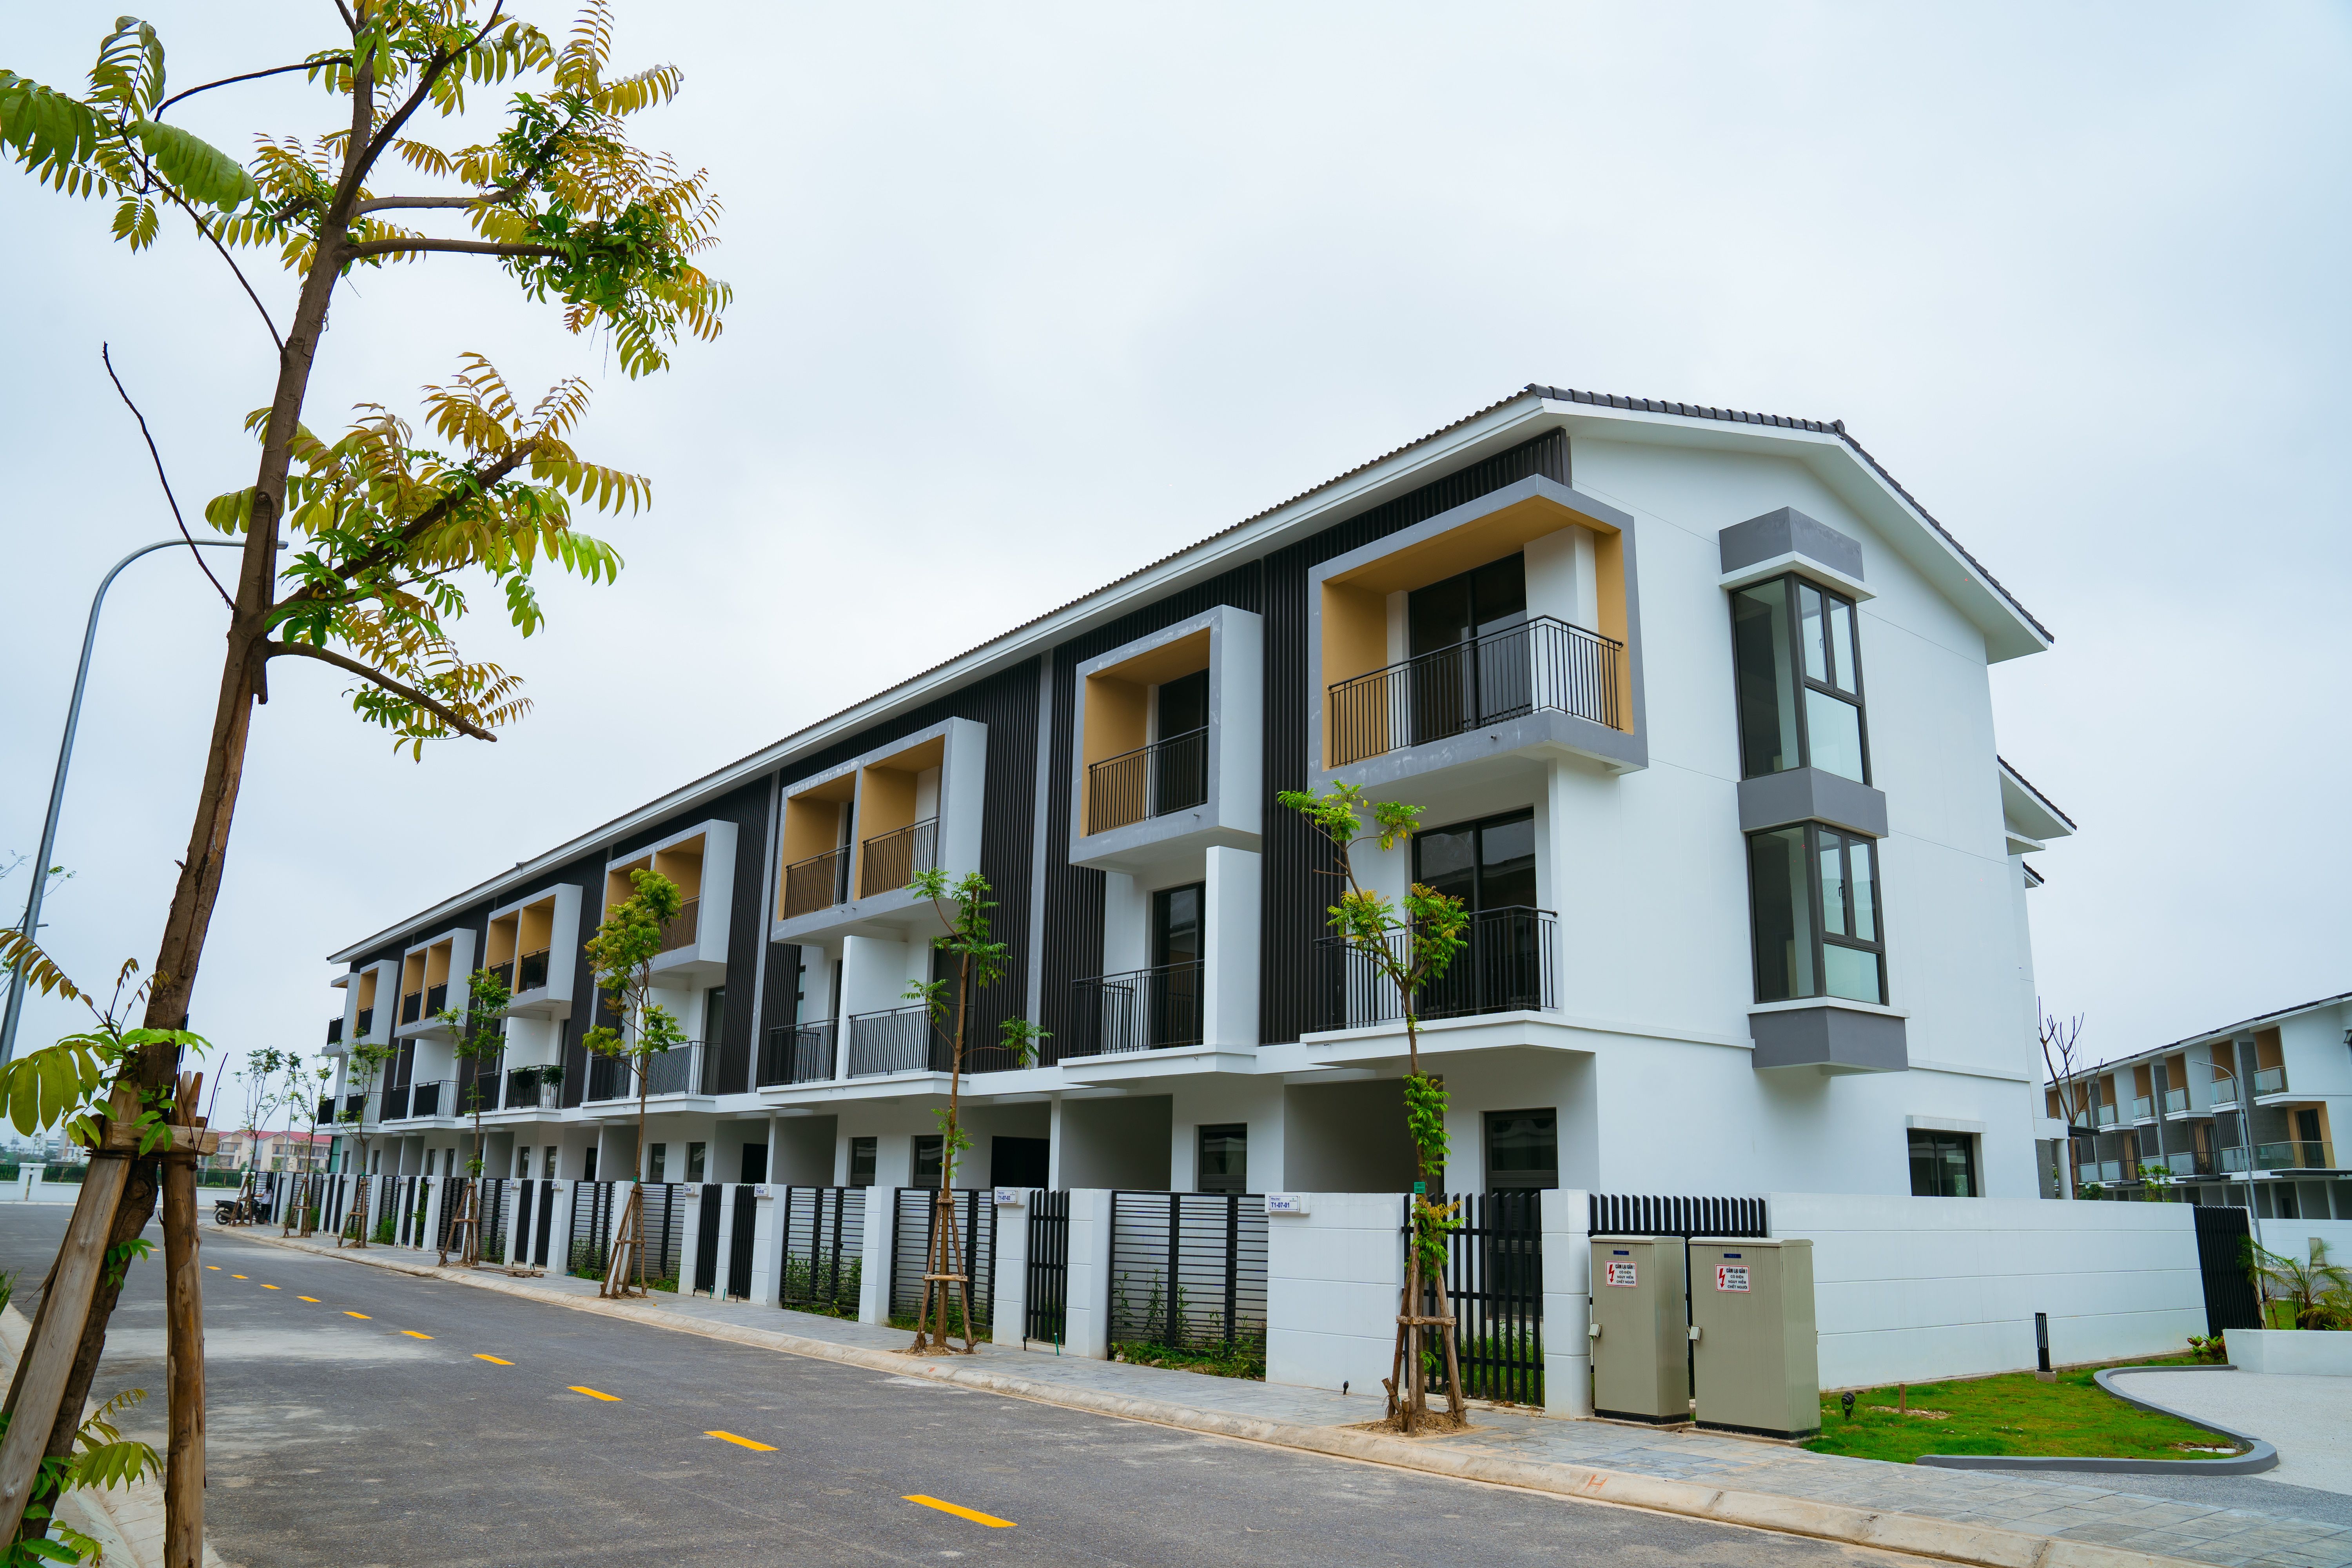 Belhomes VSIP Hai Phong - 44 units terrace house